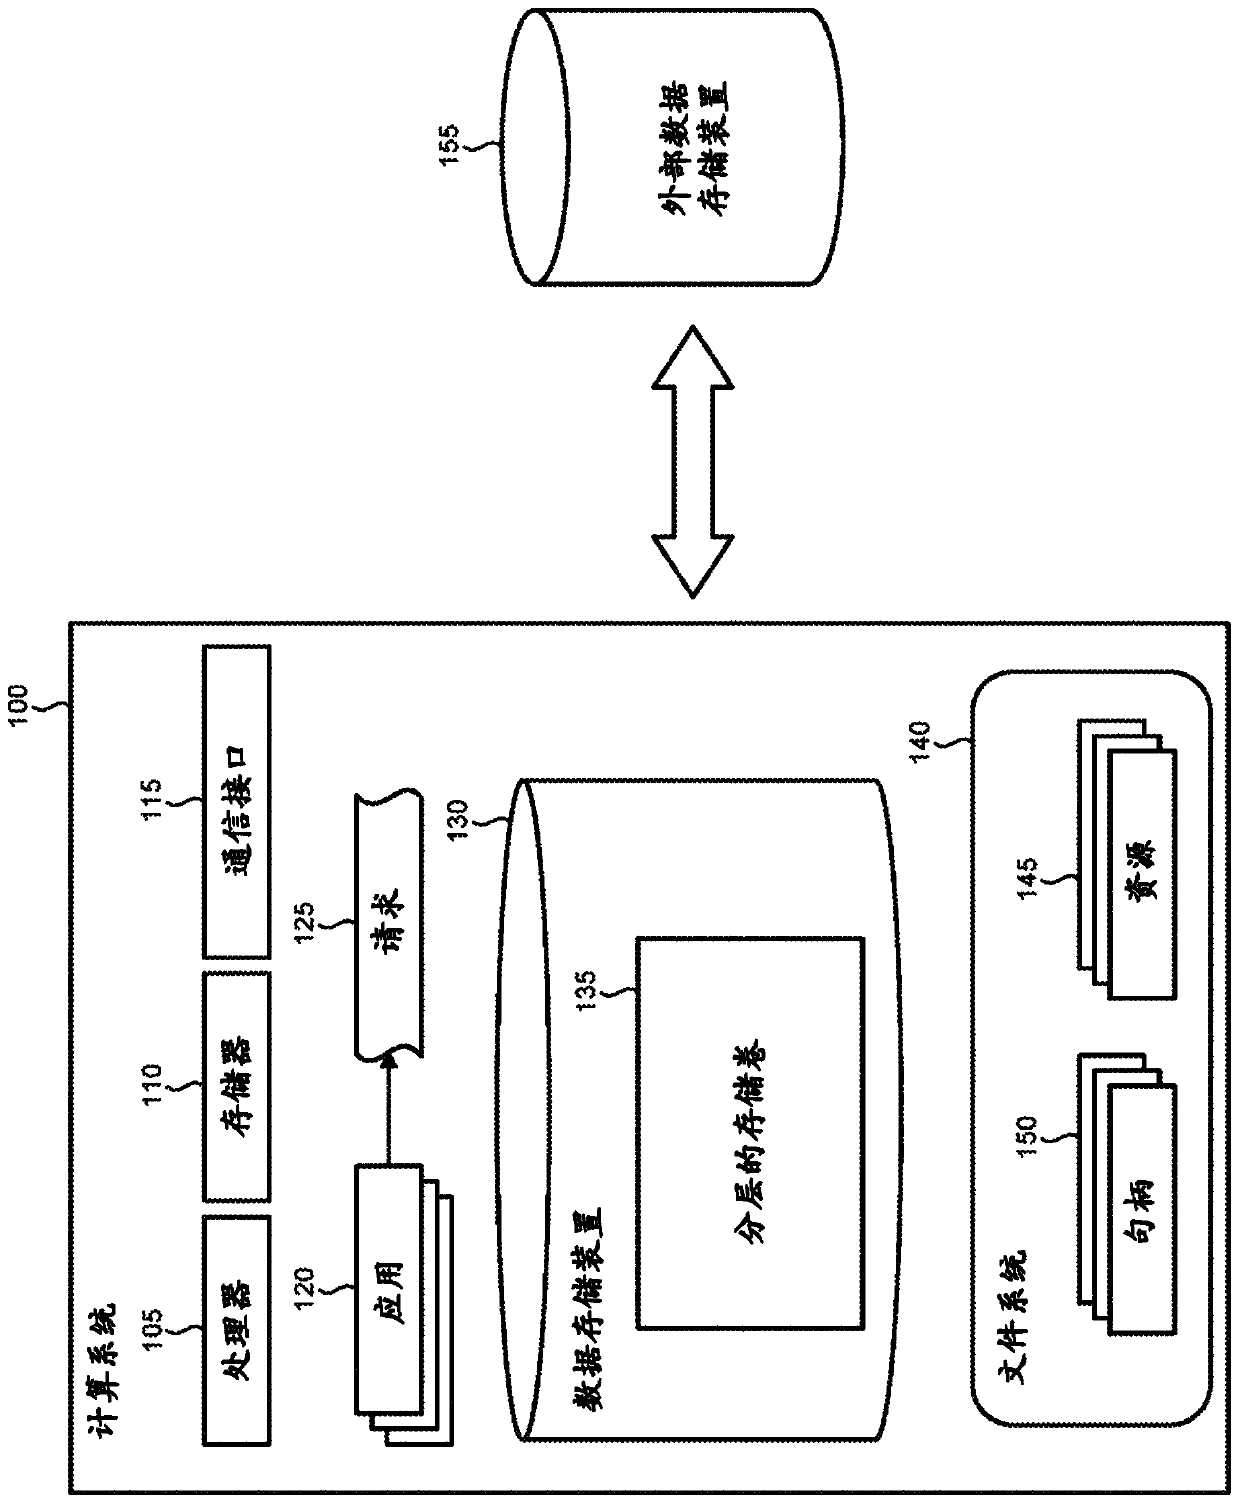 File system for shingled magnetic recording (SMR)